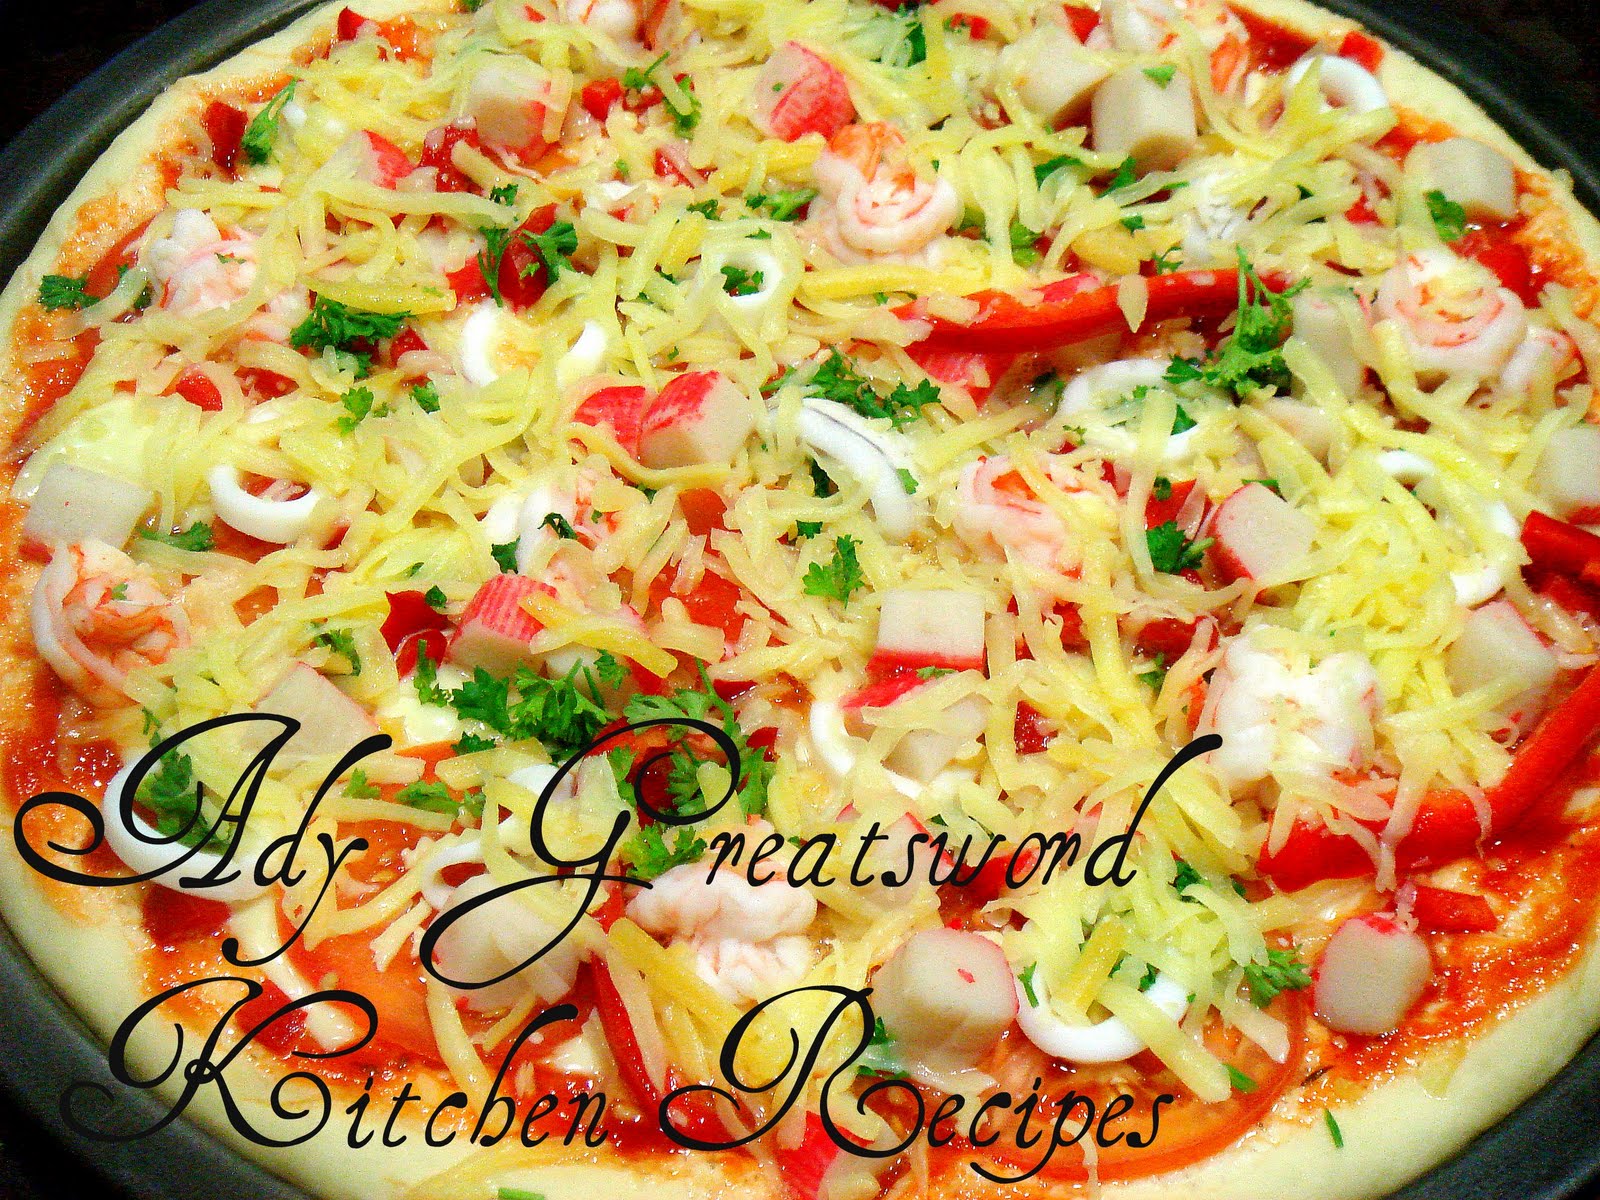 Resepi Doh Pizza Homemade - Pewarna g